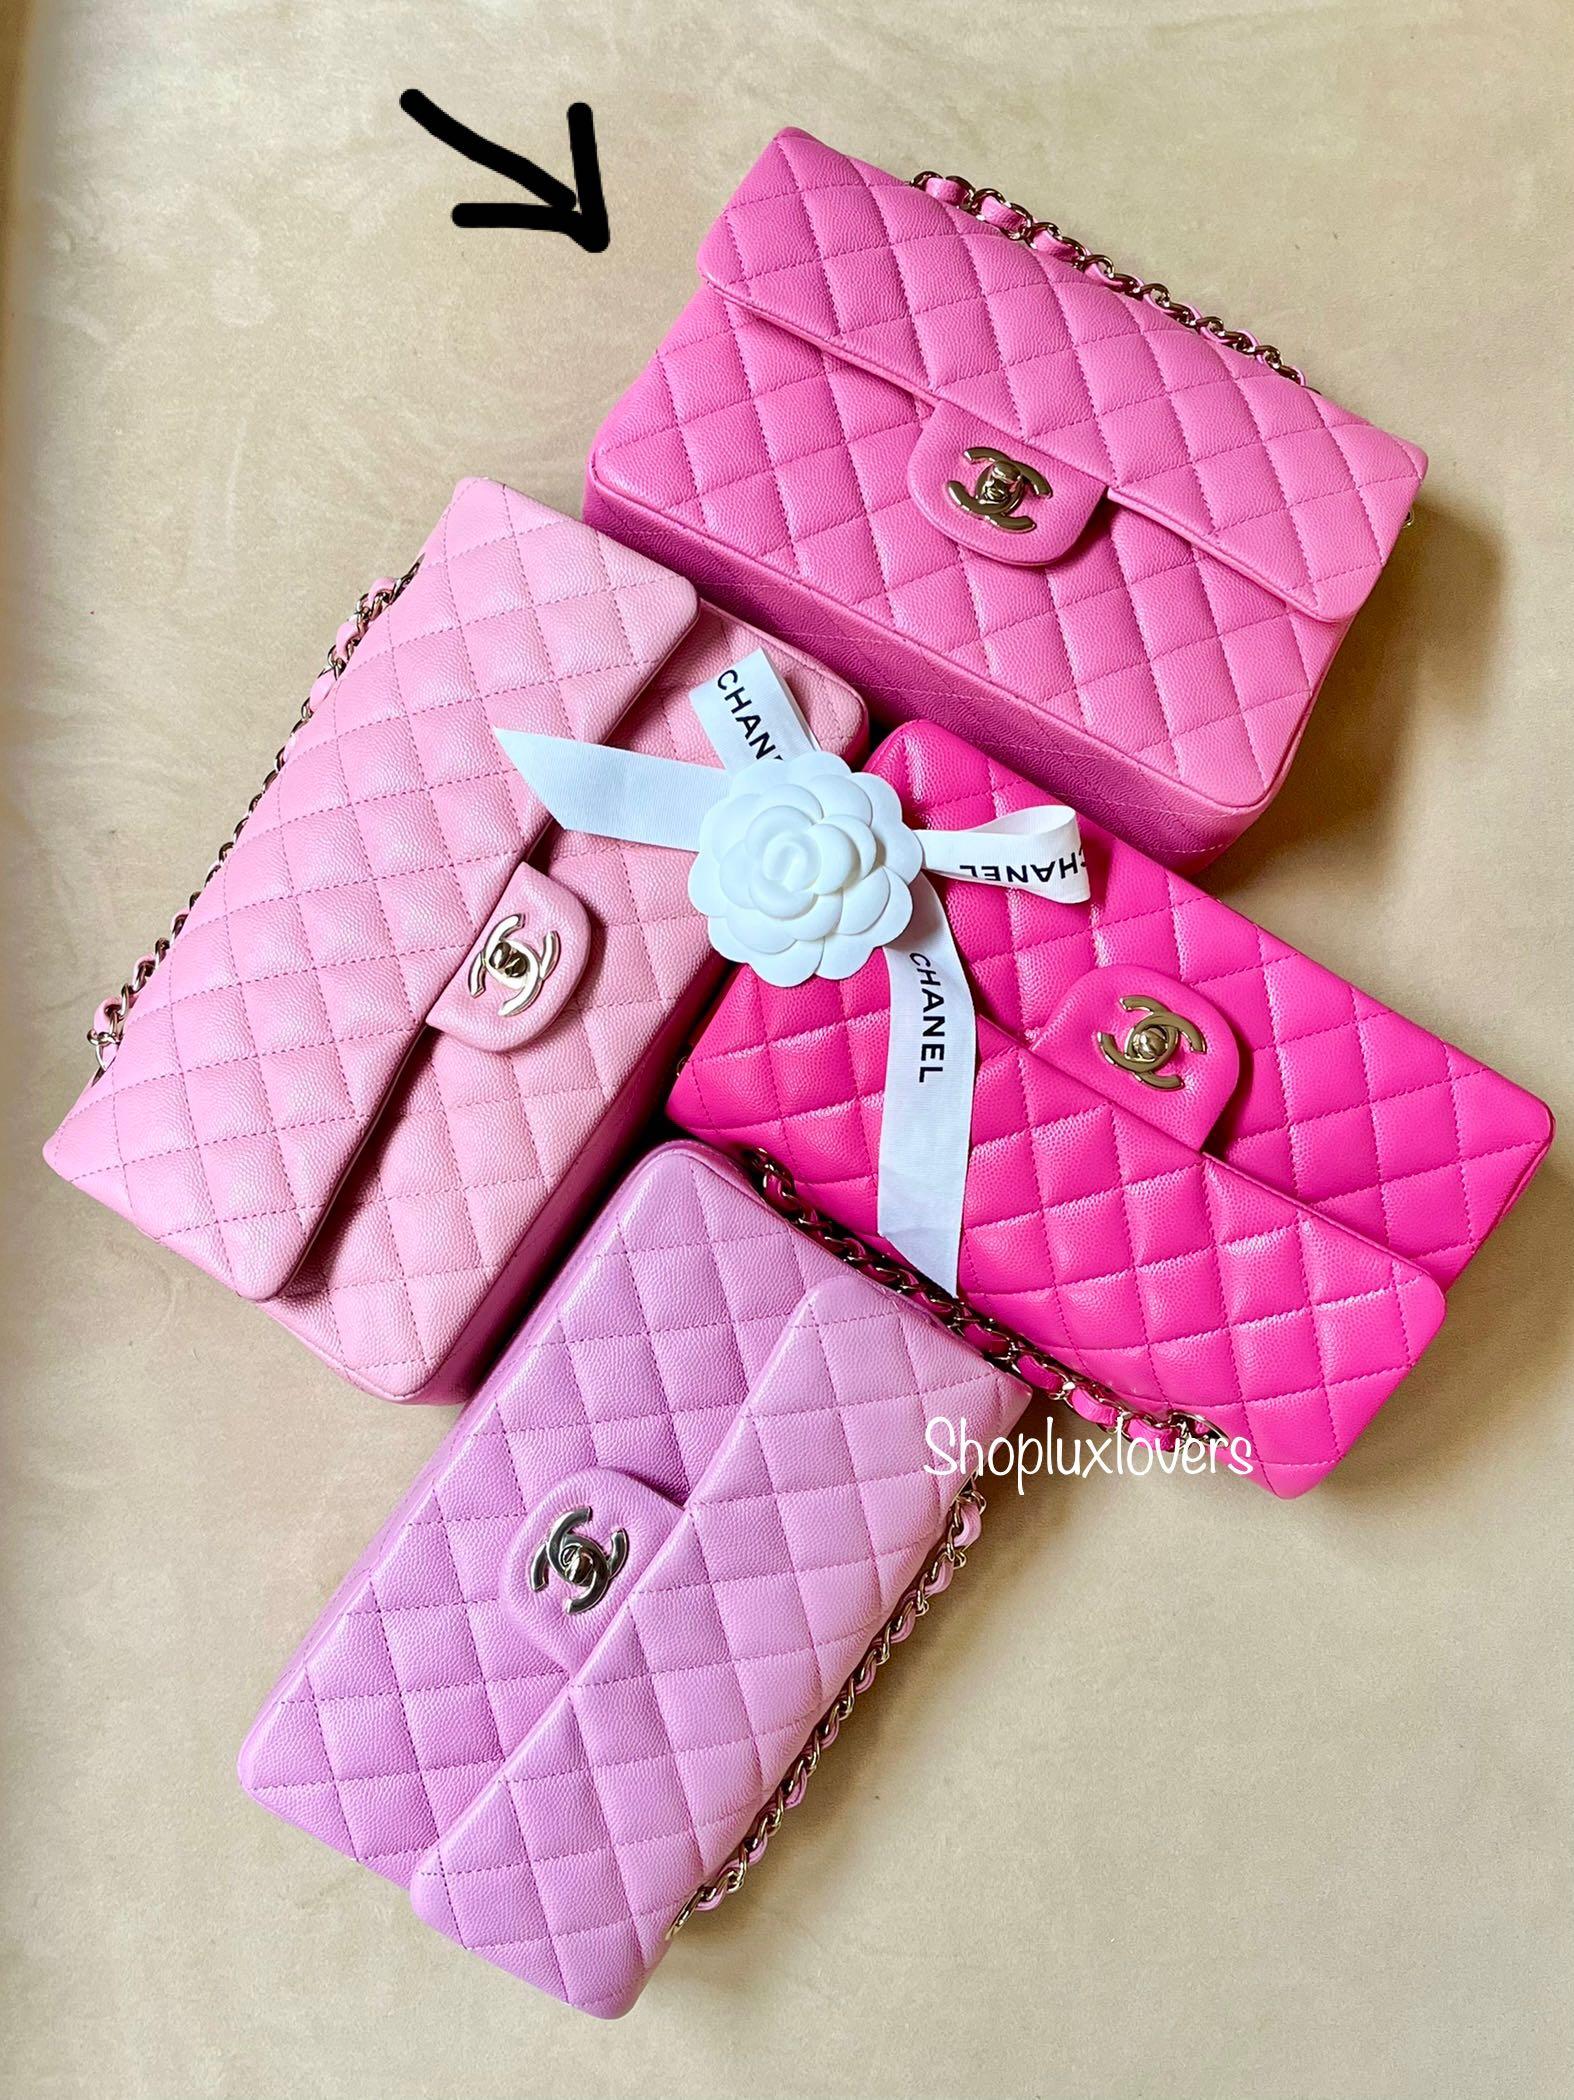 NEW CHANEL 21P Pink Caviar Small Classic Double Flap handbag bag